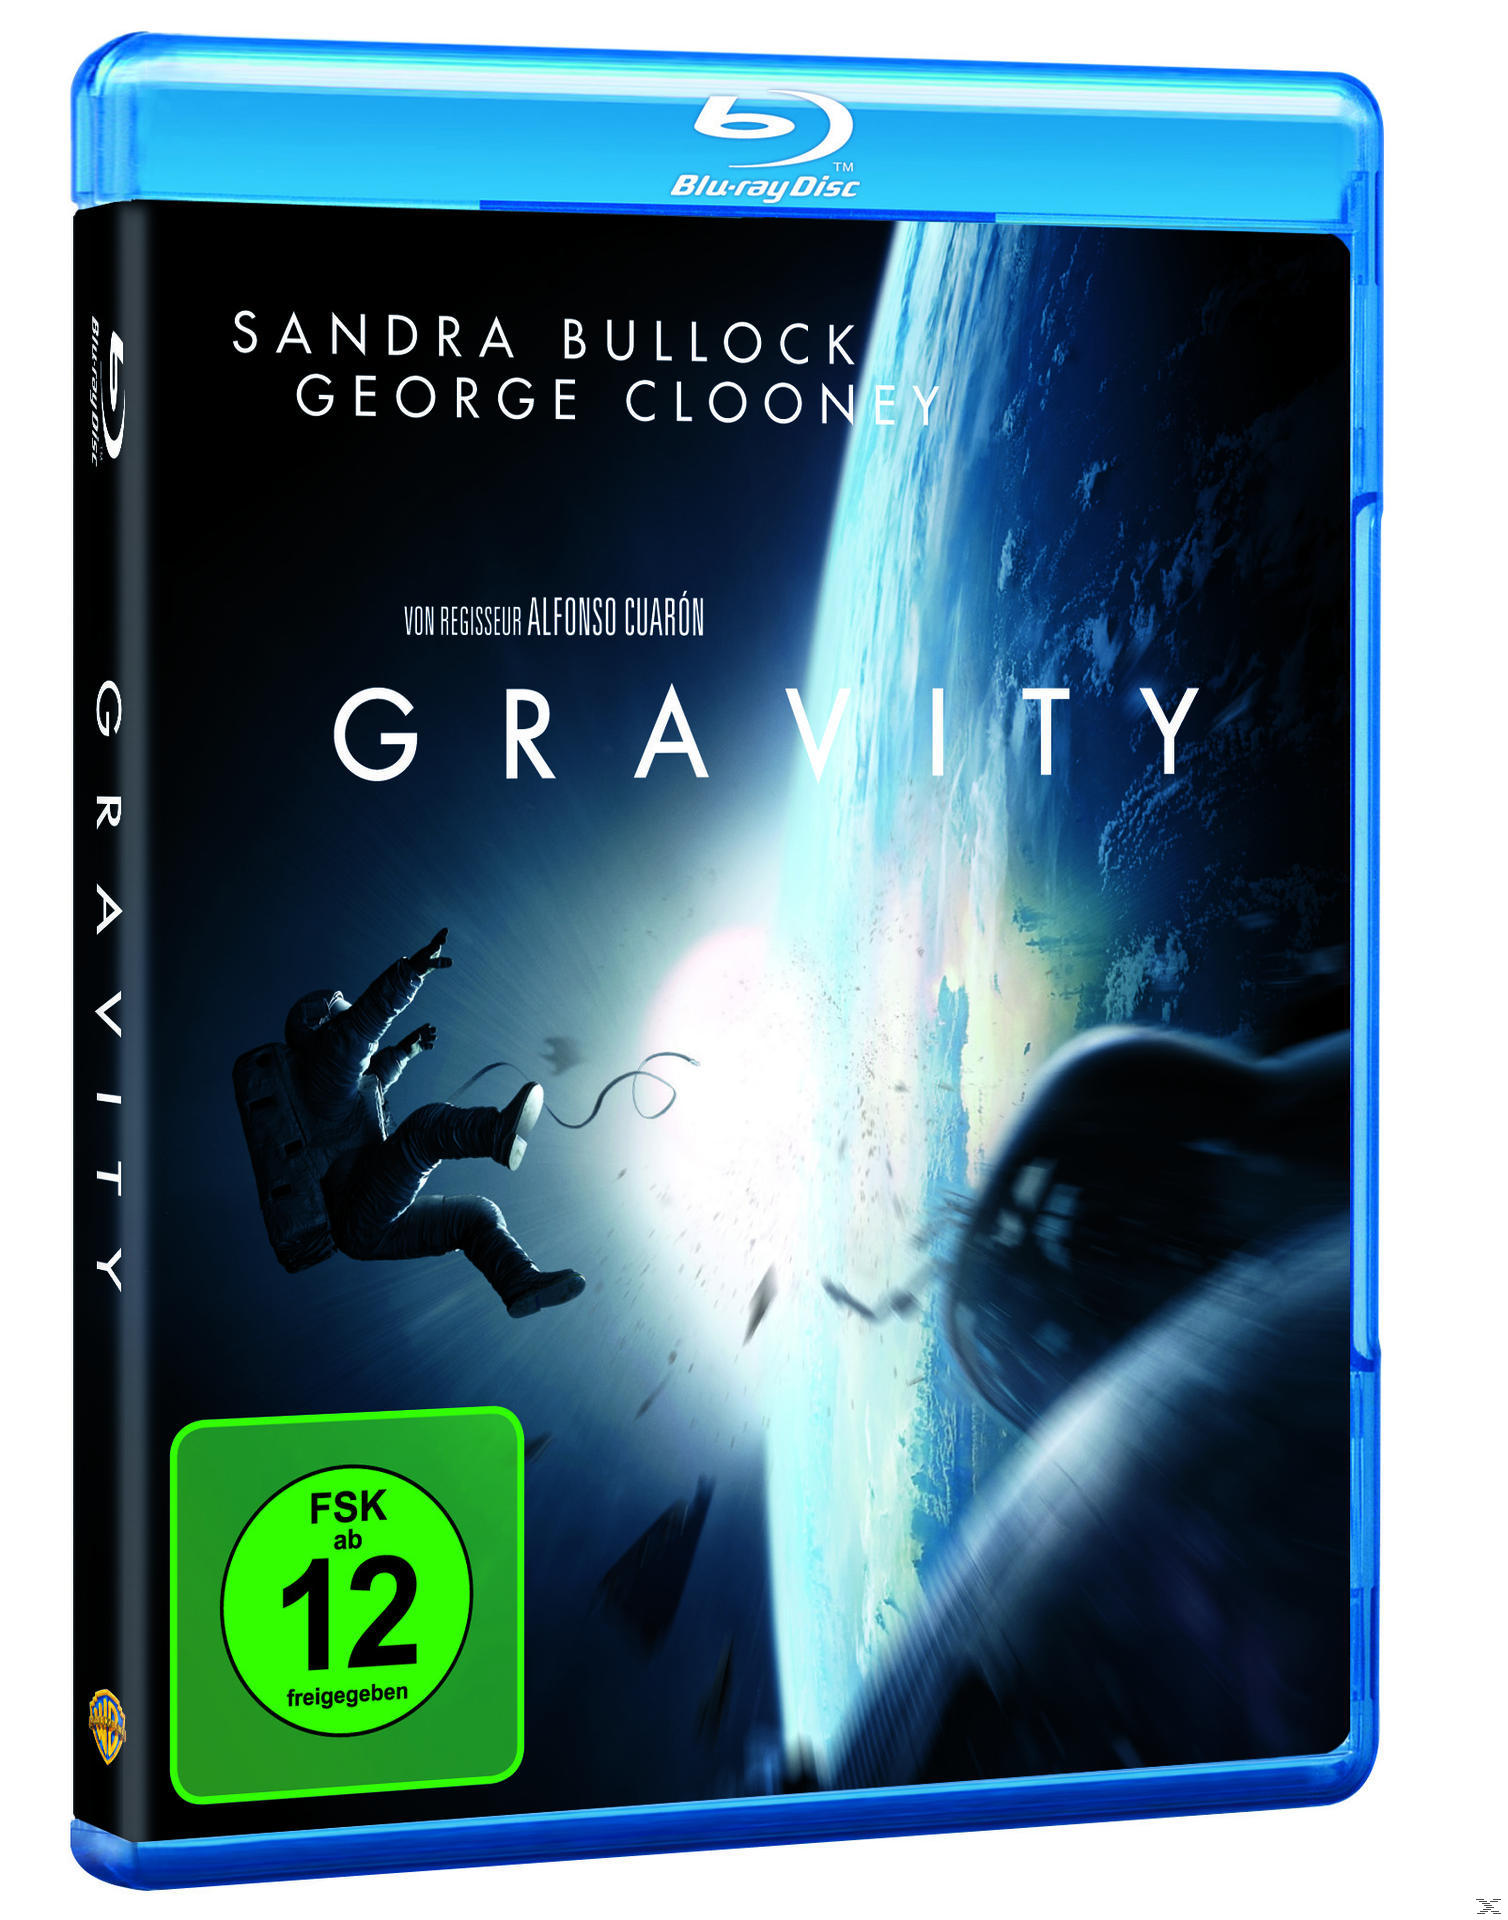 Blu-ray Gravity